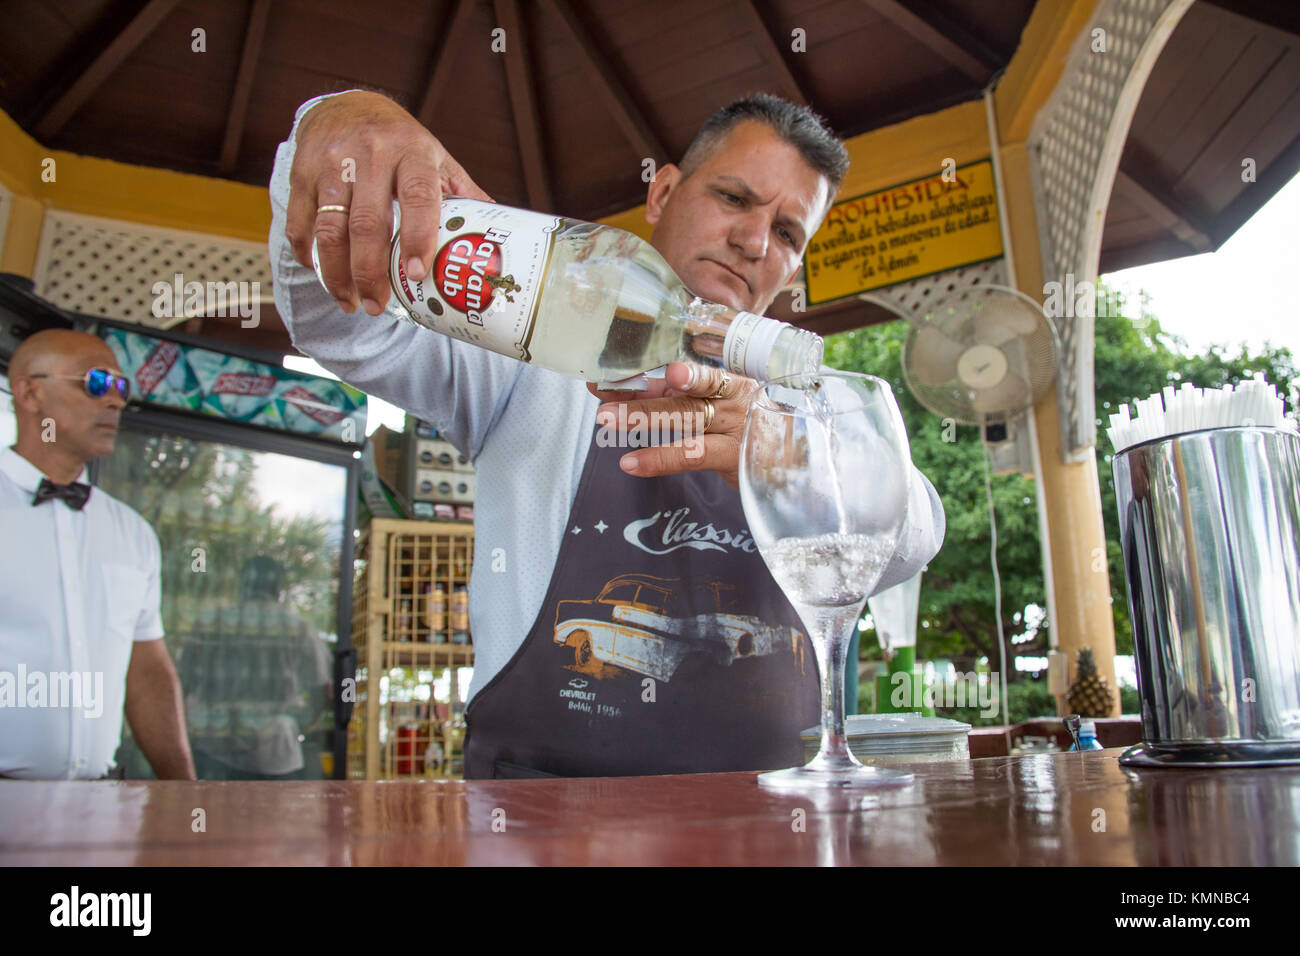 Bartender making a daiquiri with Havana Club Rum in Cienfuegos, Cuba Stock Photo